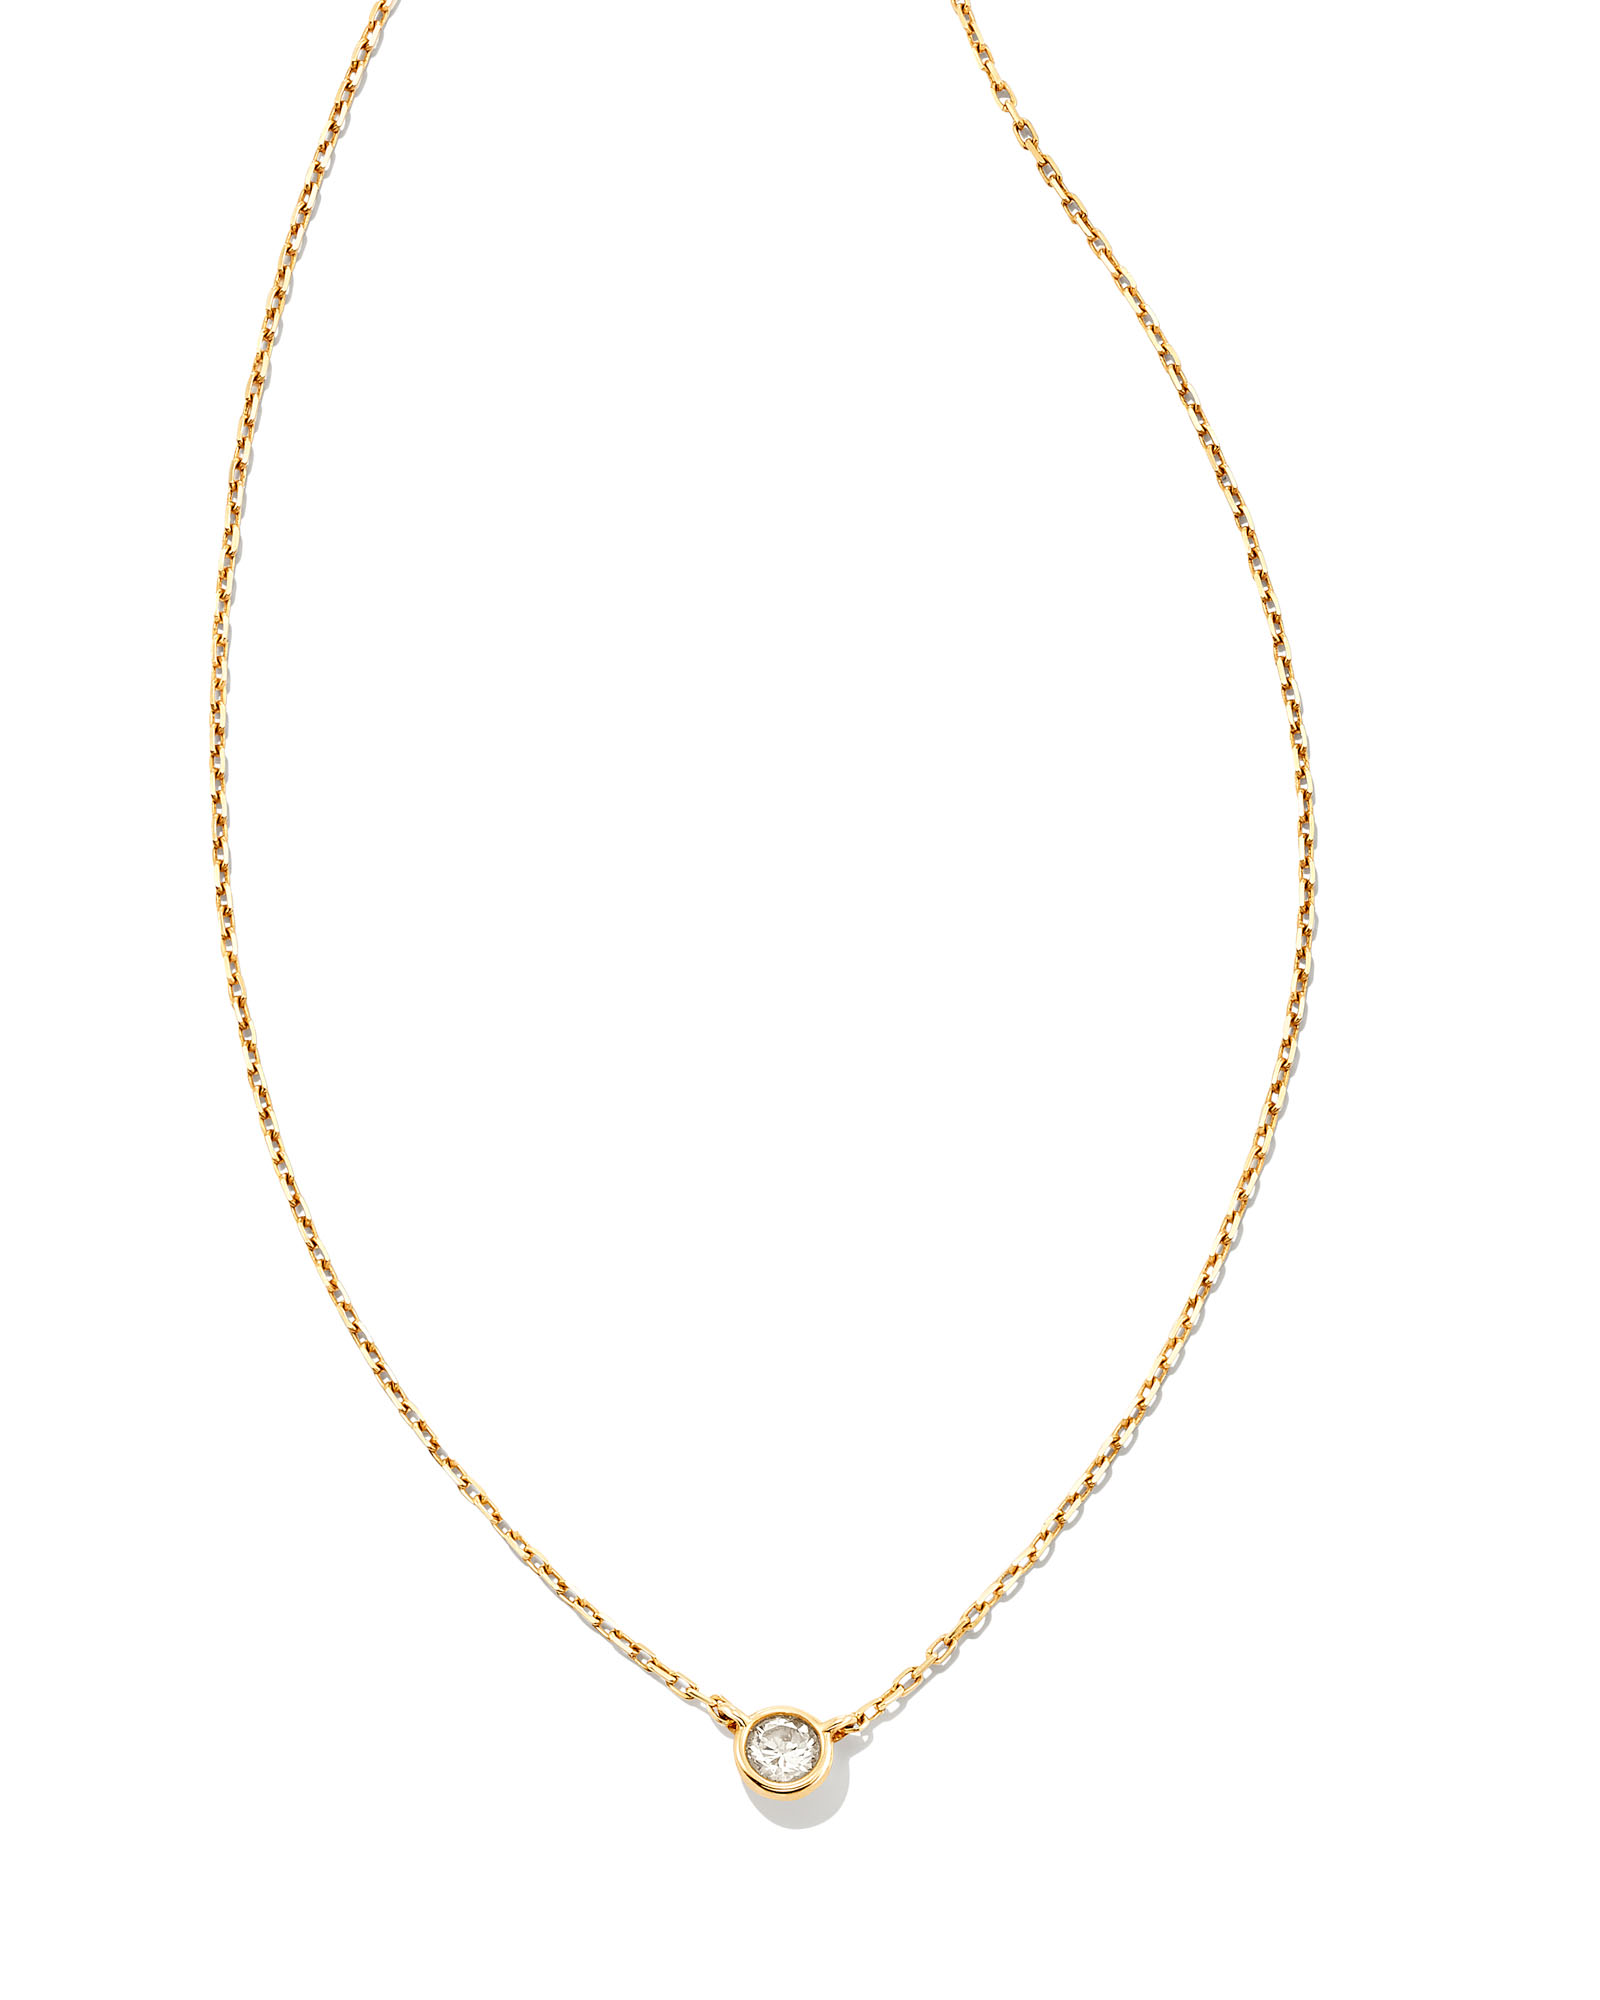 Kendra Scott Yellow Tone Sunburst Pendant Necklace | Puckett's Fine Jewelry  | Benton, KY